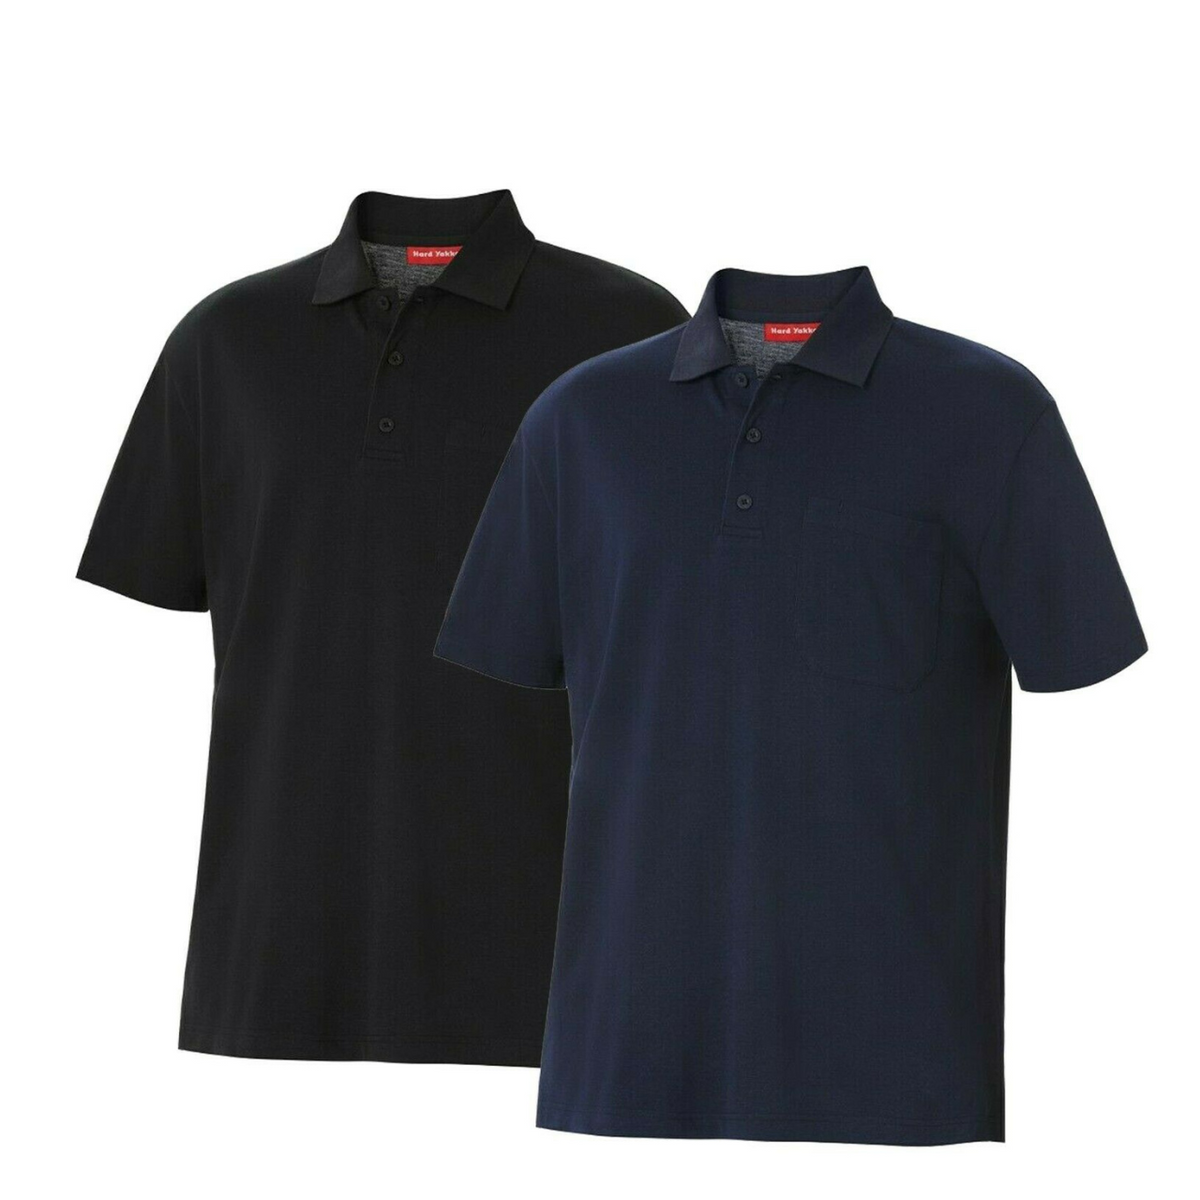 Mens Hard Yakka Plain Cotton Pique Polo Short Sleeve Work Shirt Top Y11306-Collins Clothing Co